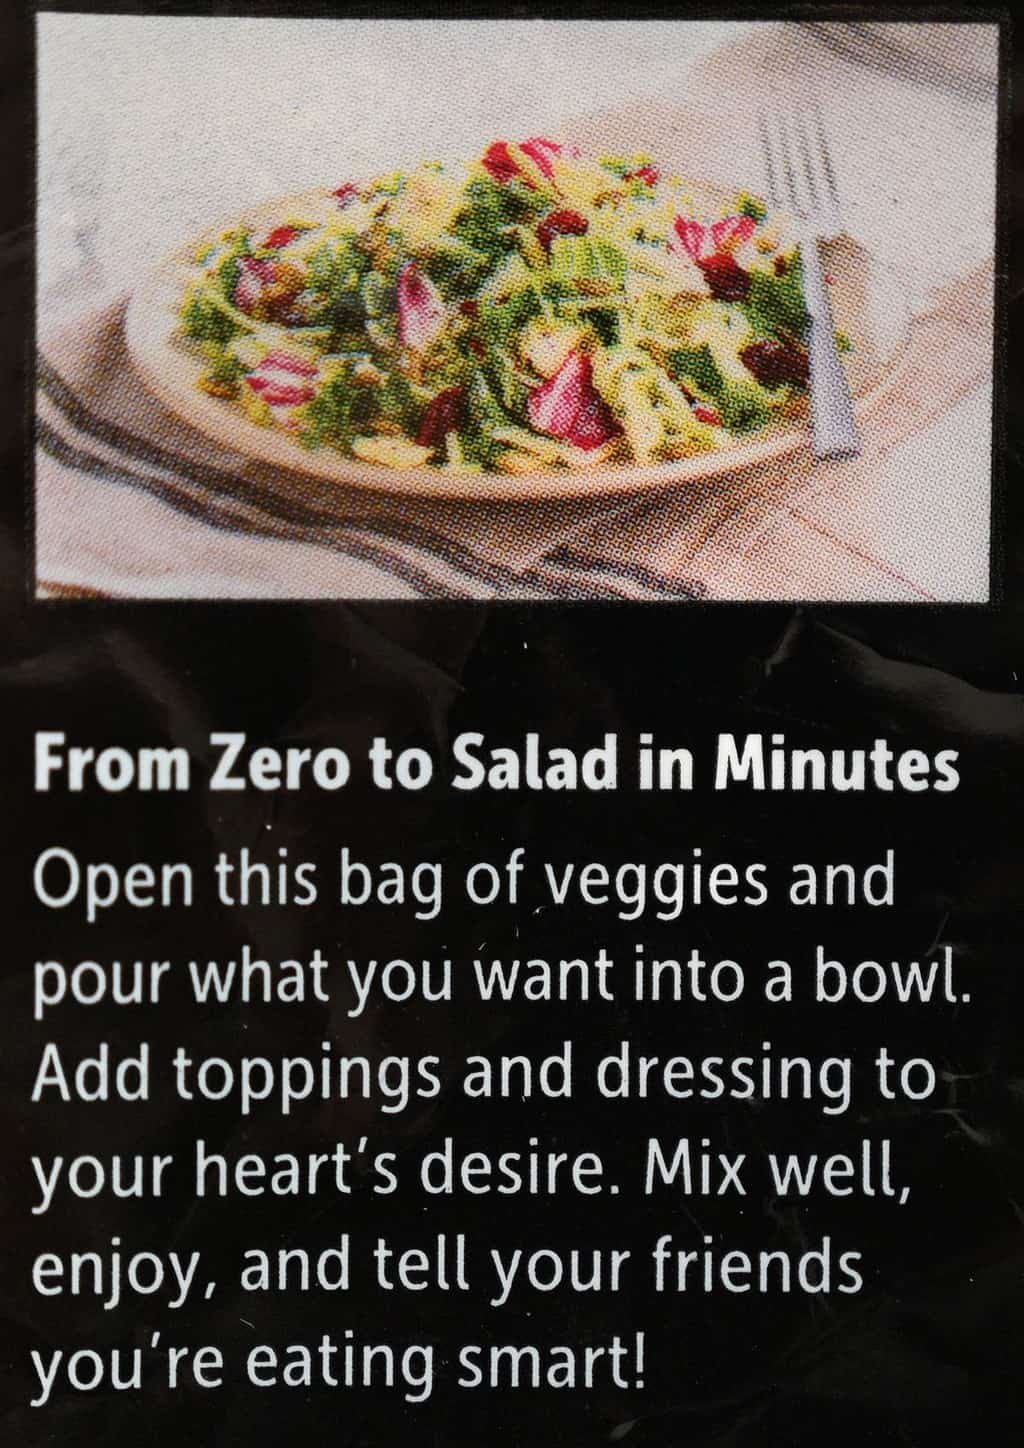 Costco Eat Smart Sweet Kale Salad Kit product description from bag. 